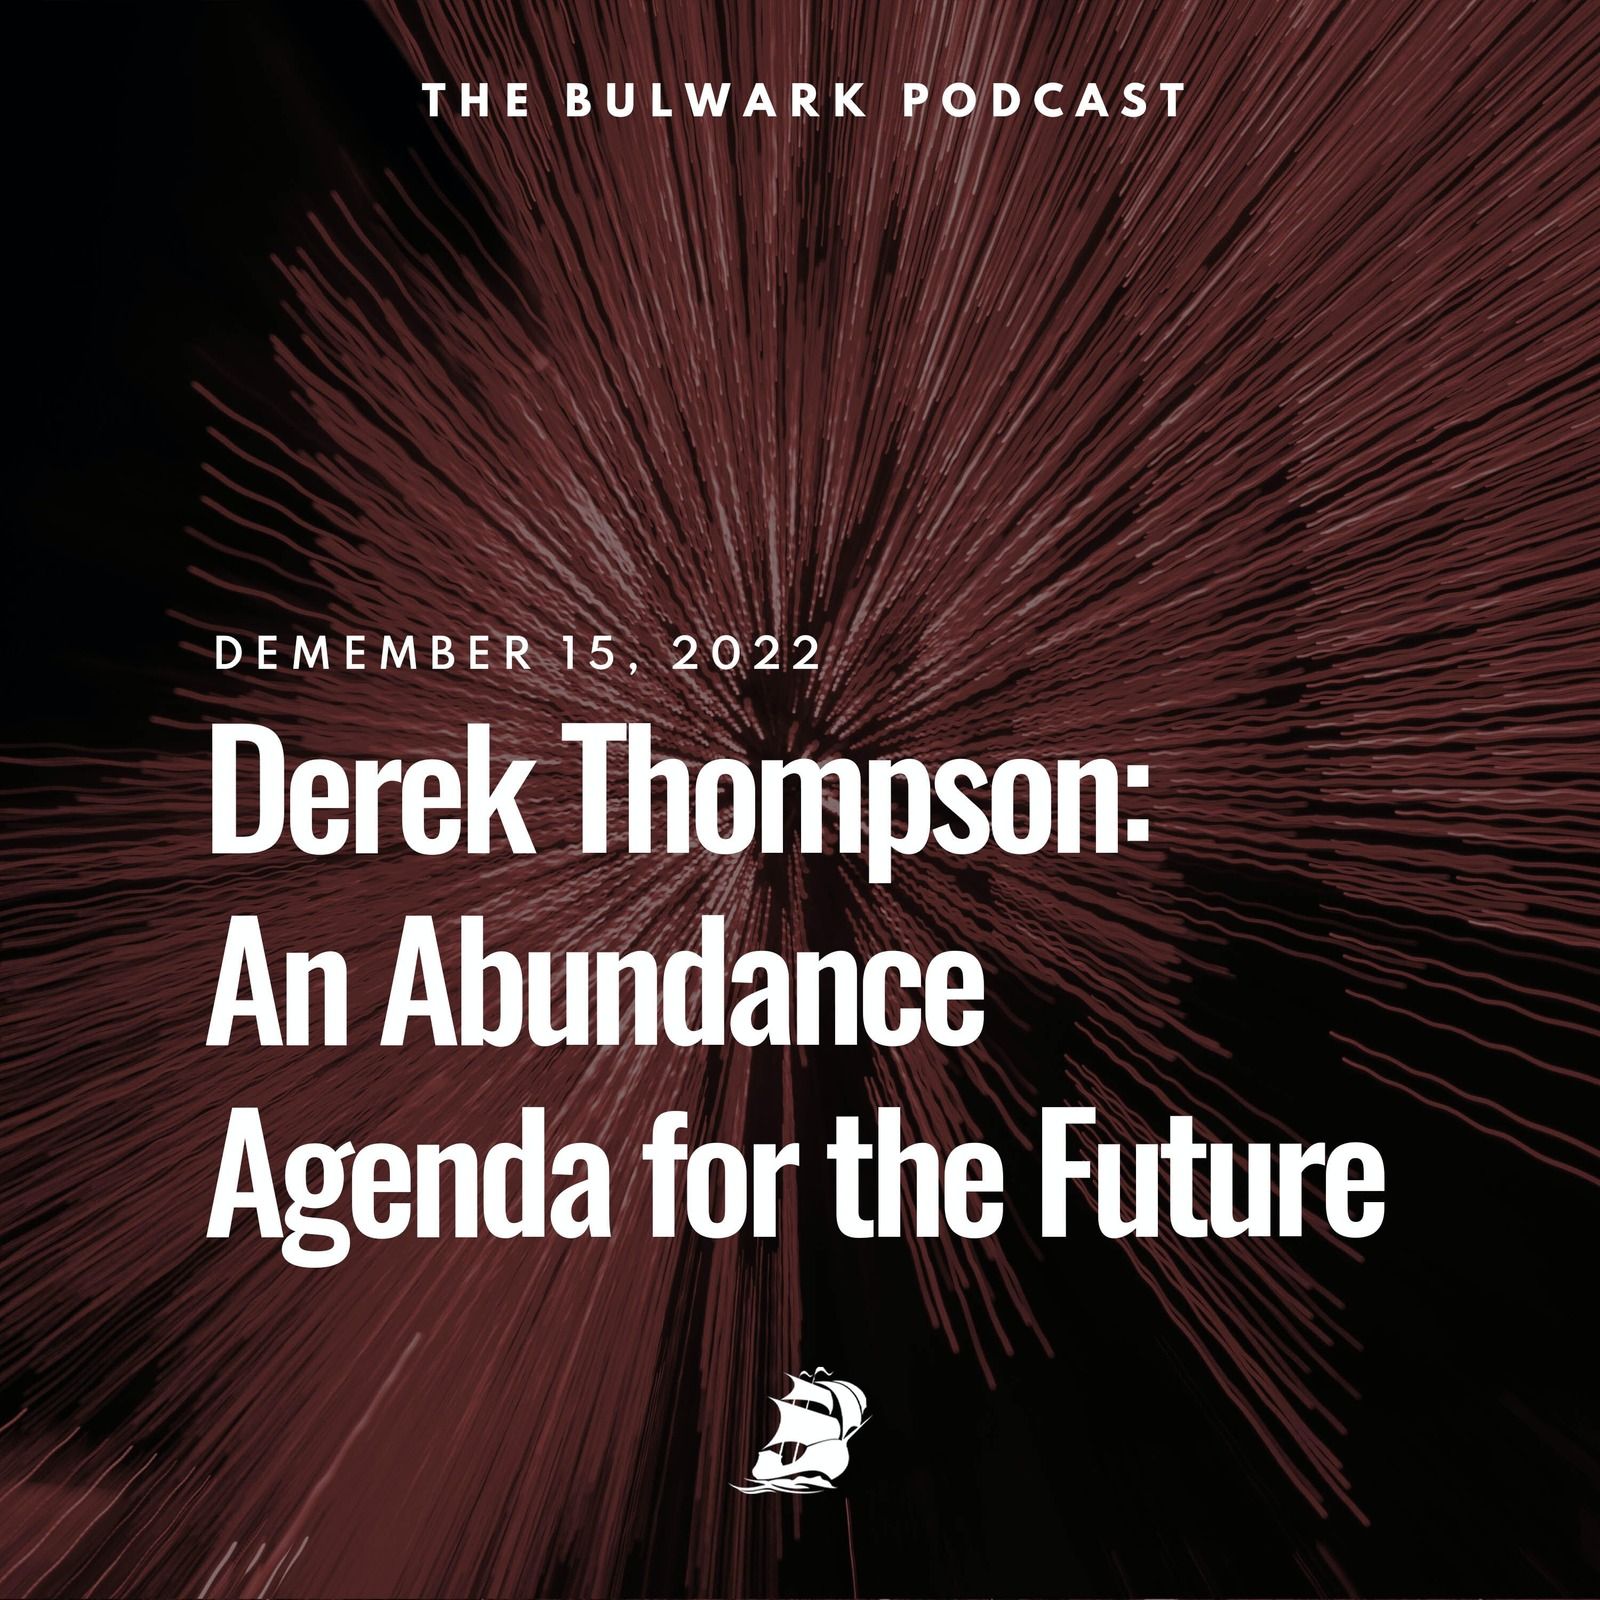 Derek Thompson: An Abundance Agenda for the Future